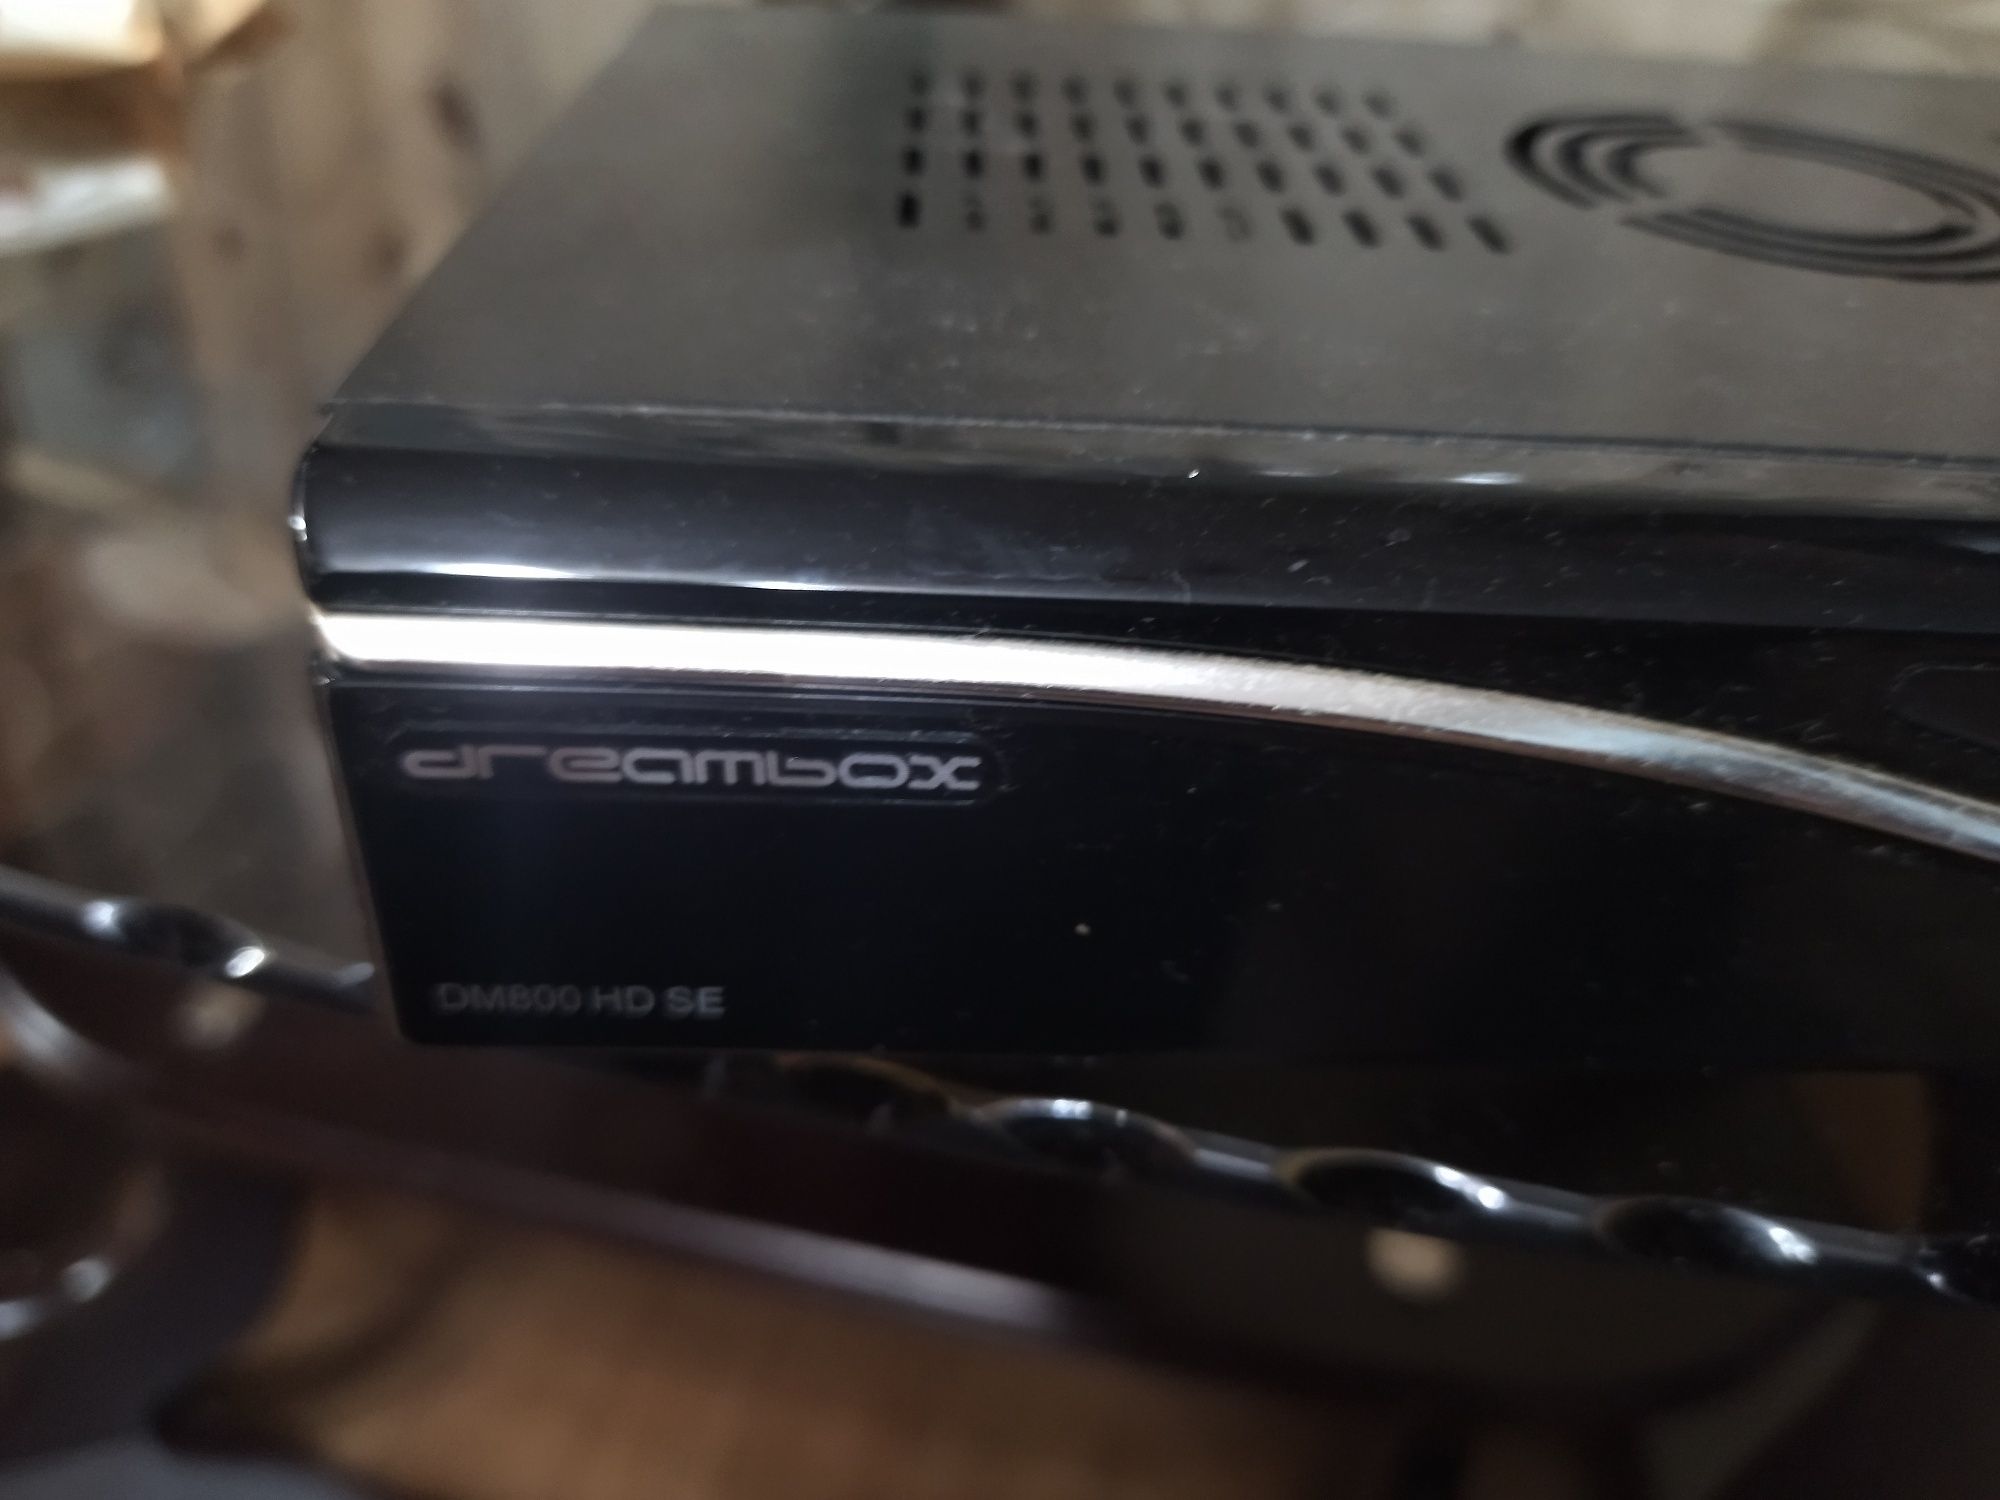 Dm800 HD SE Dreambox